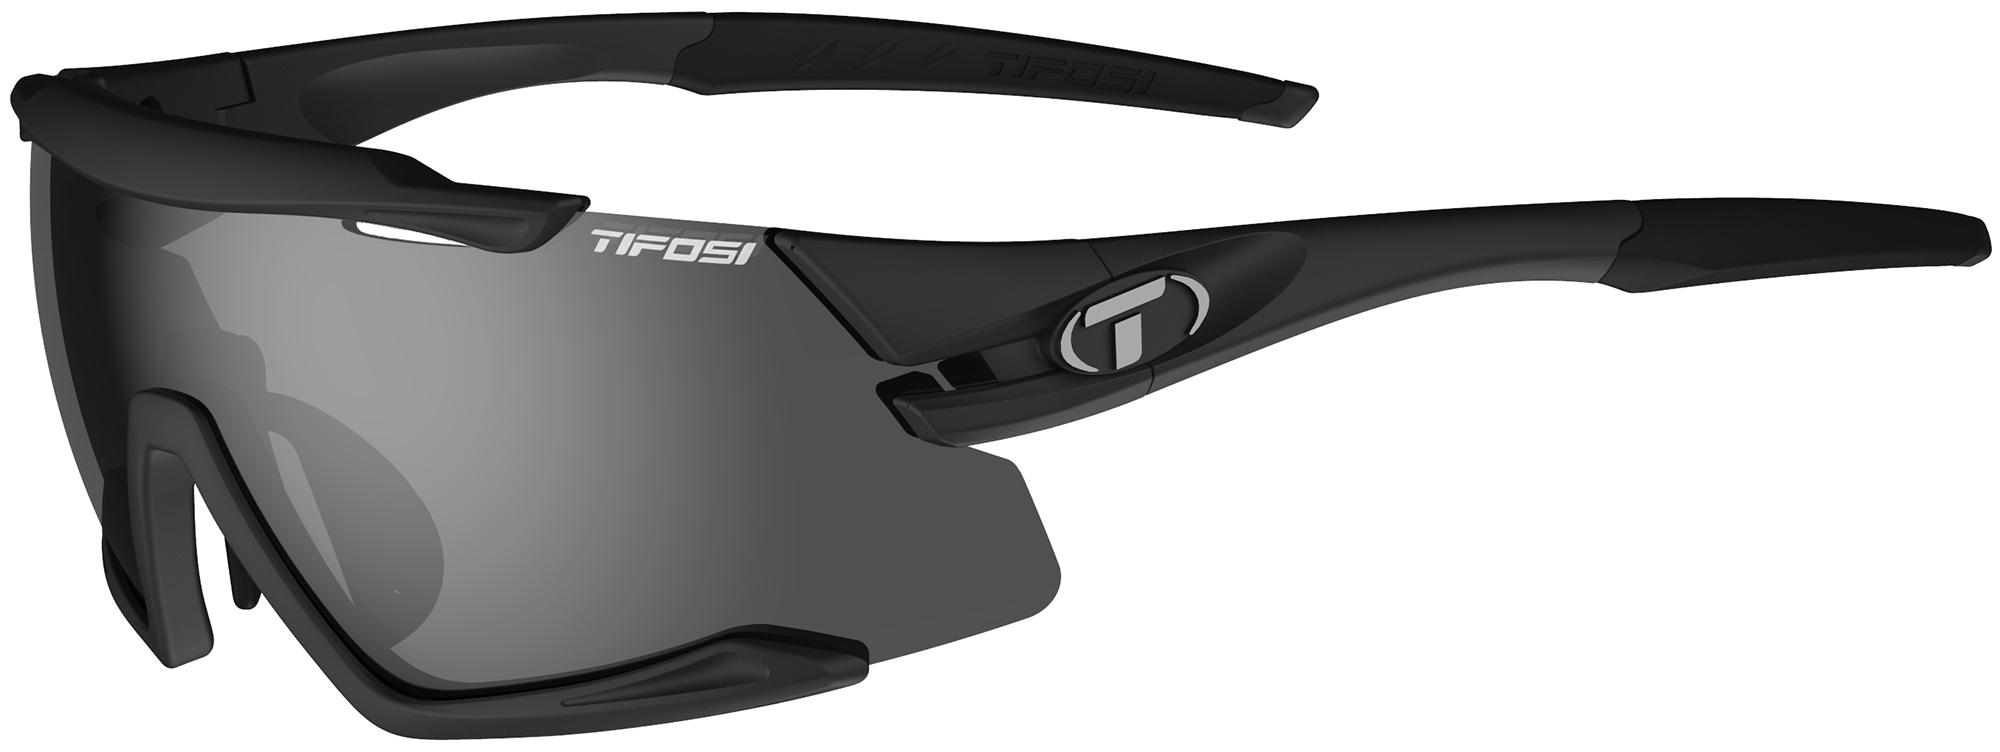 Tifosi Eyewear Aethon 3 Lens Sunglasses (black) 2019  Matte Black